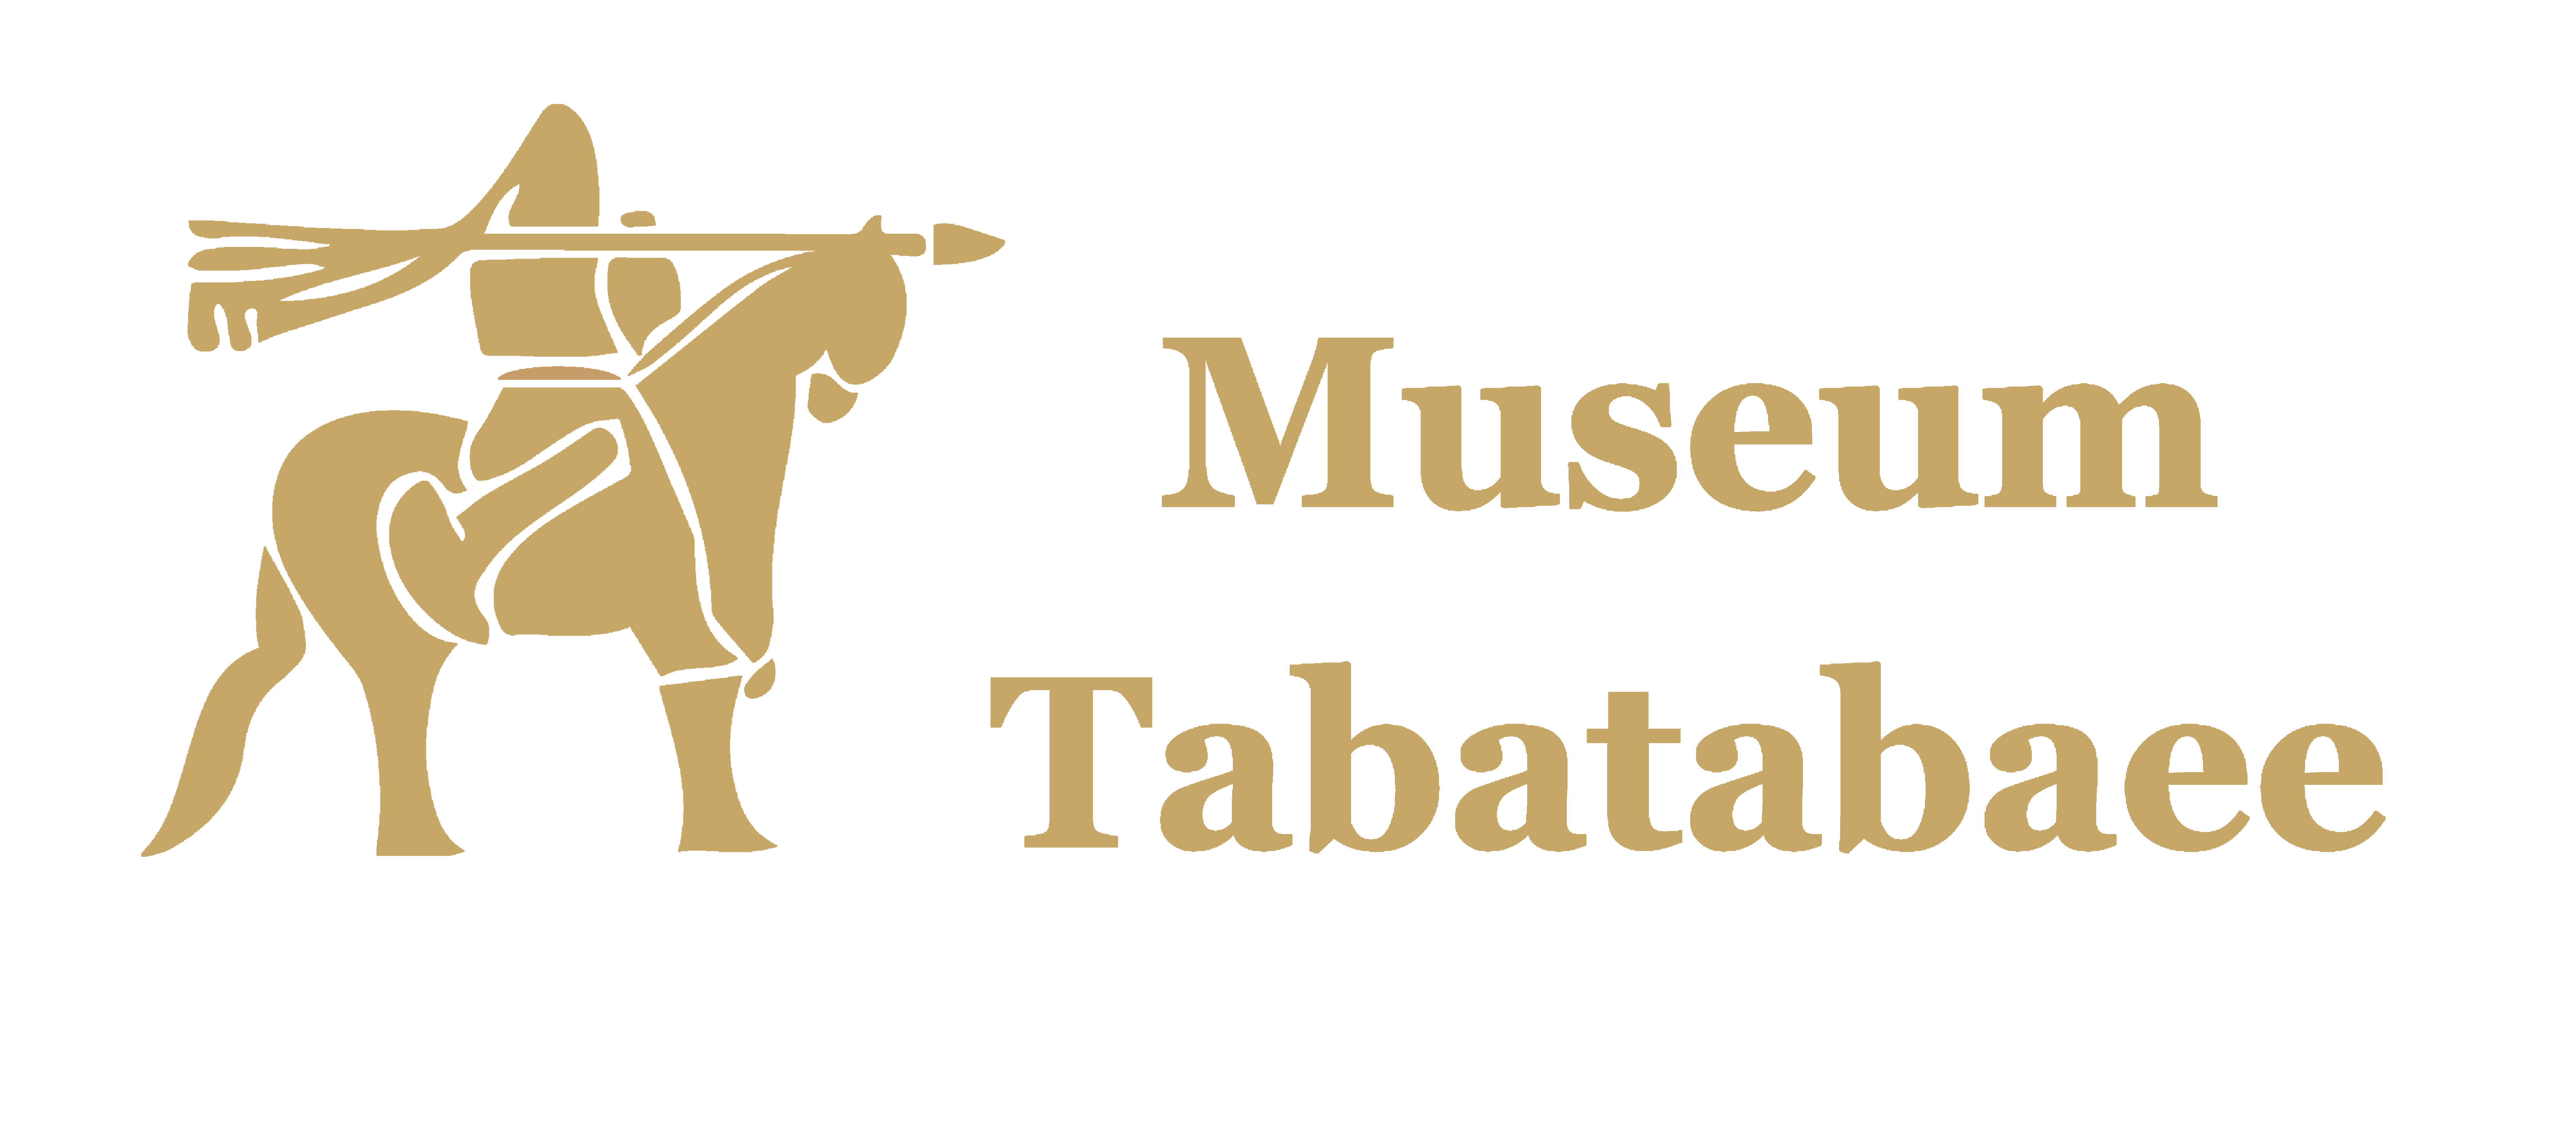 Chicago Personals: Main Pages on Legitimate Sites - Museum Tabatabaee